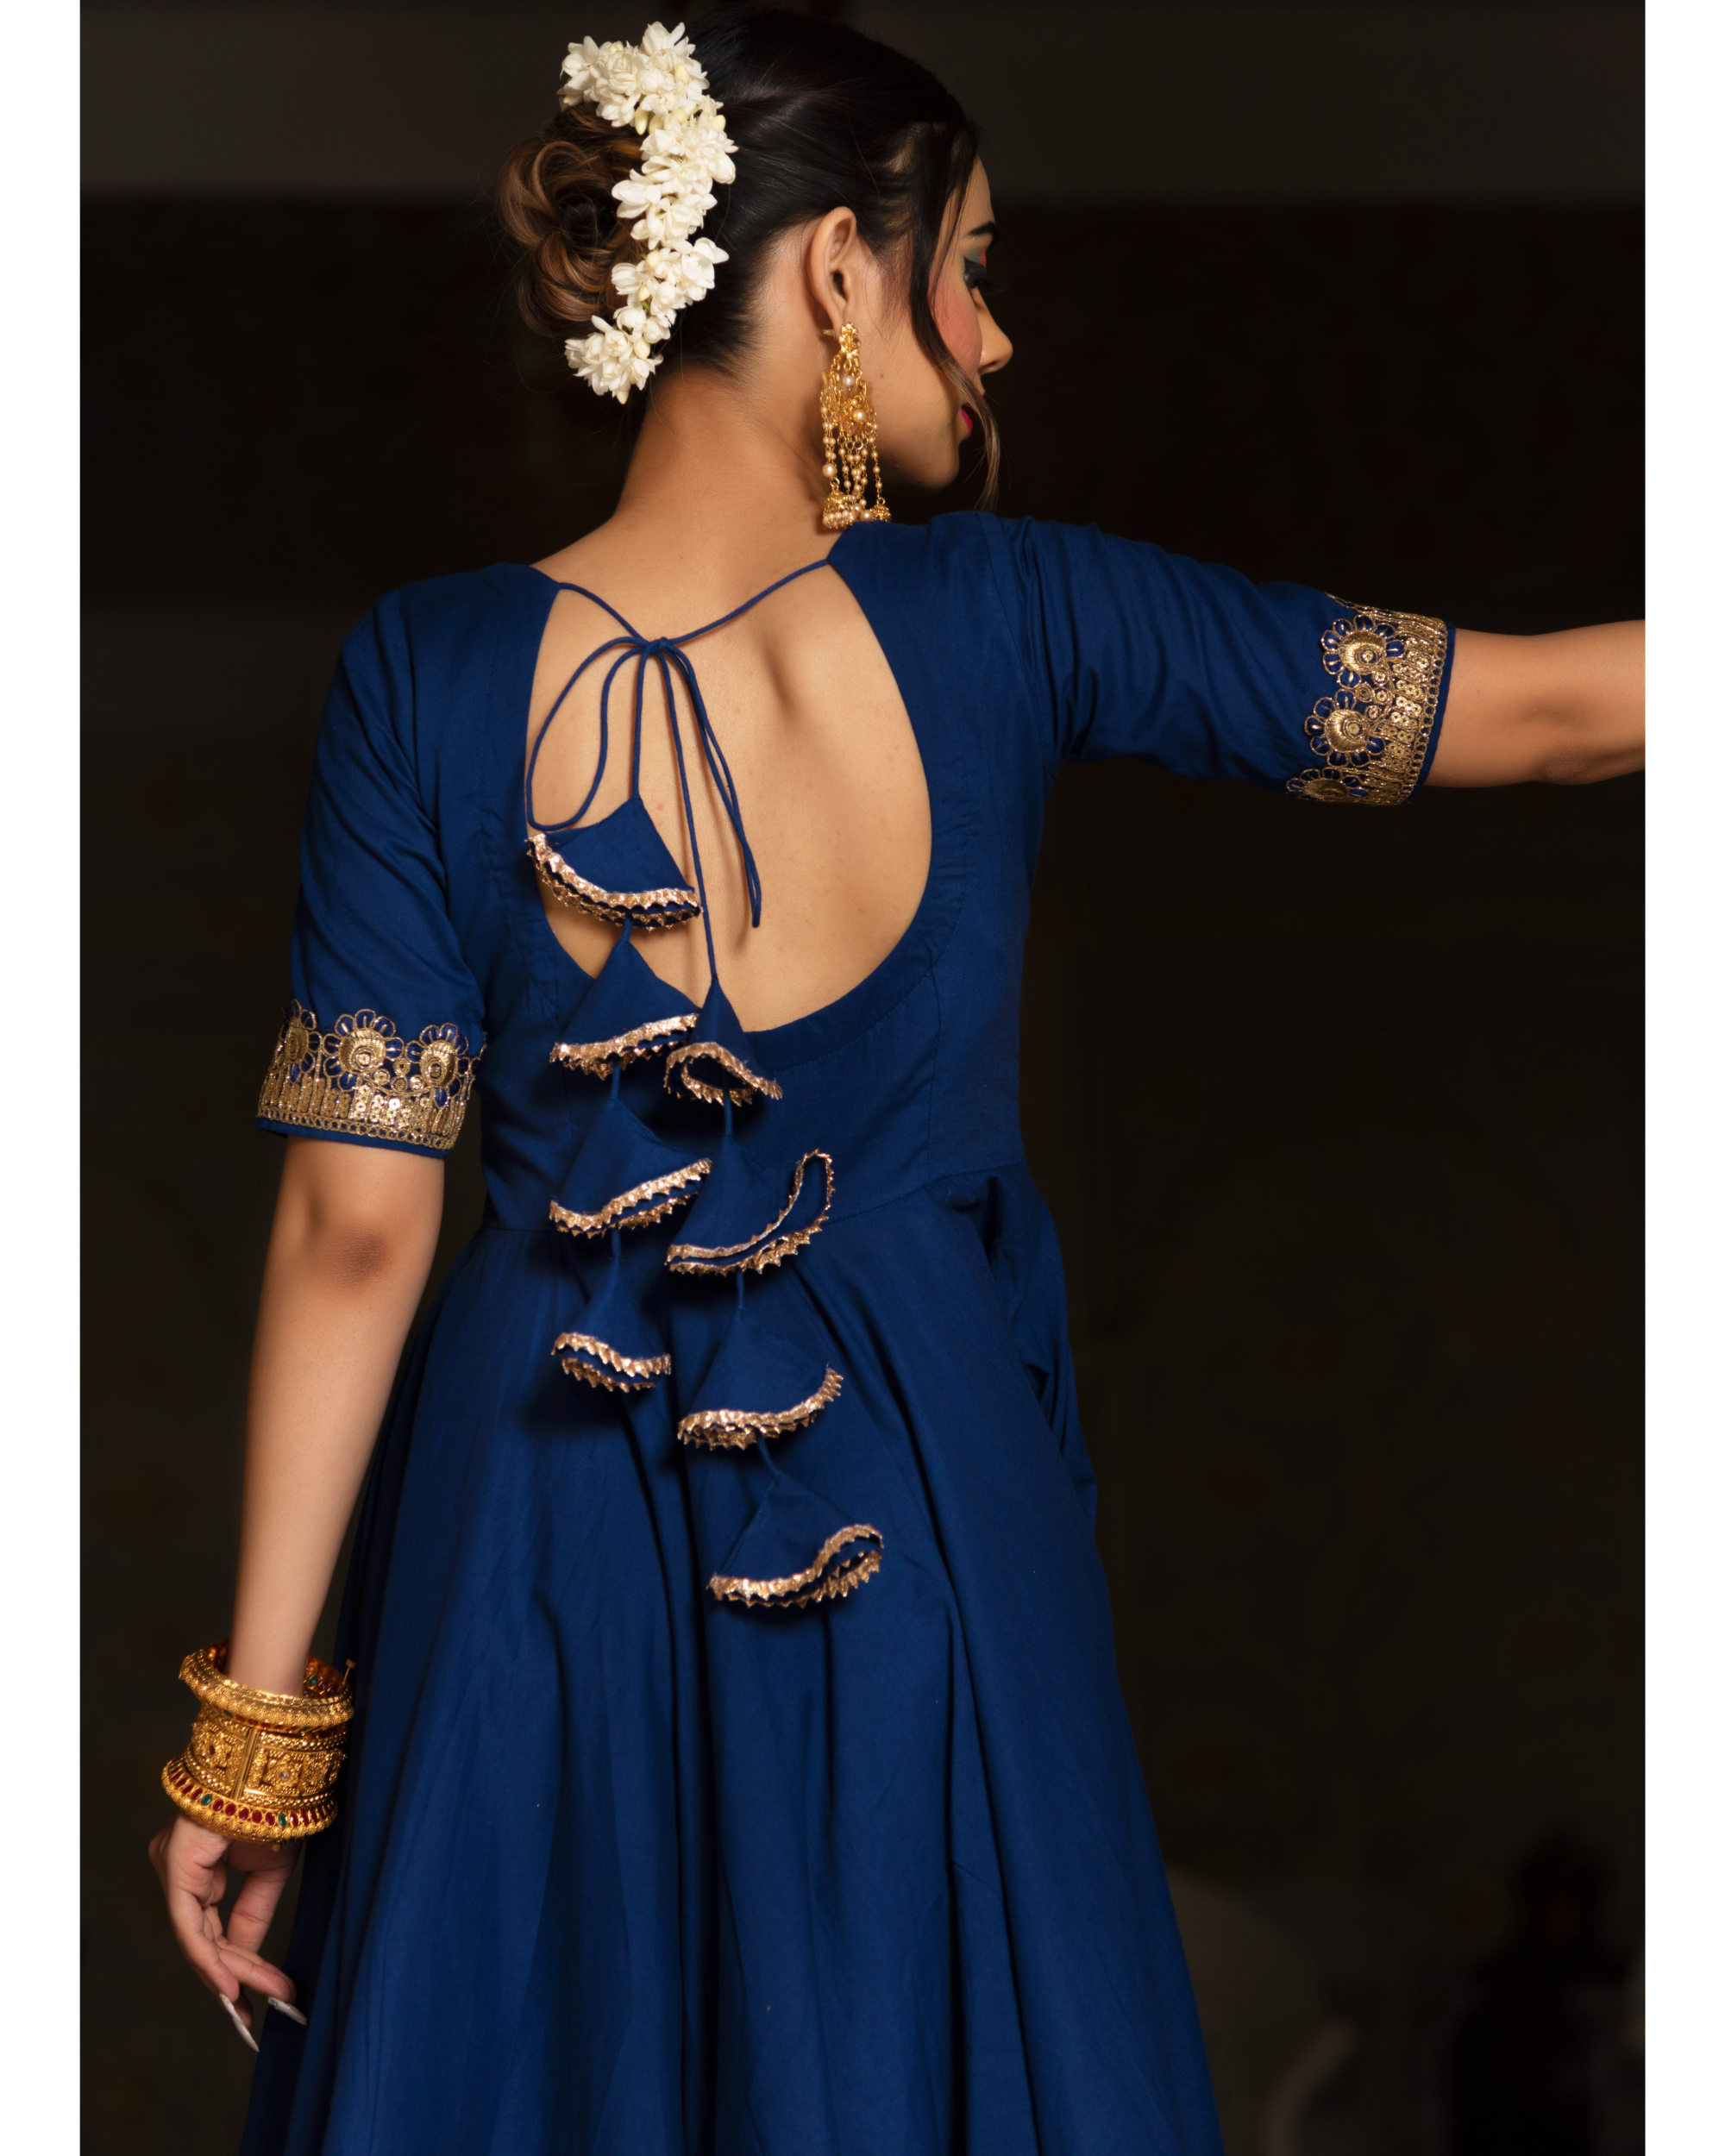 Madison | Vinka Design | Satin Wedding Gown with Pockets